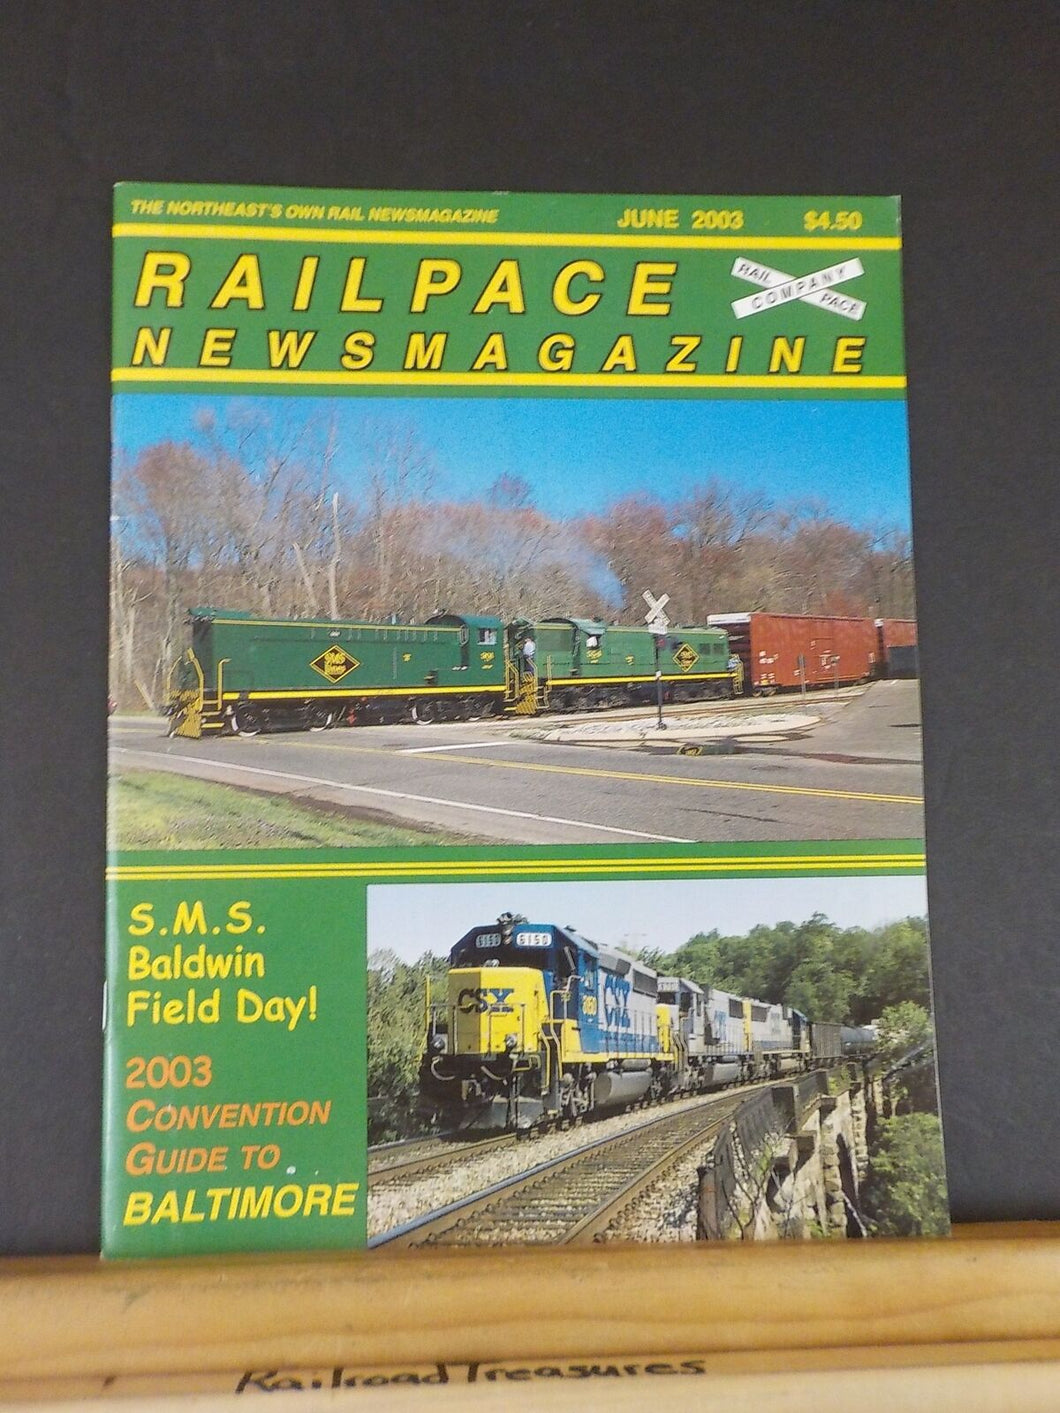 Rail Pace News Magazine 2003 June Railpace SMS Baldwin field day Baltimore Guide